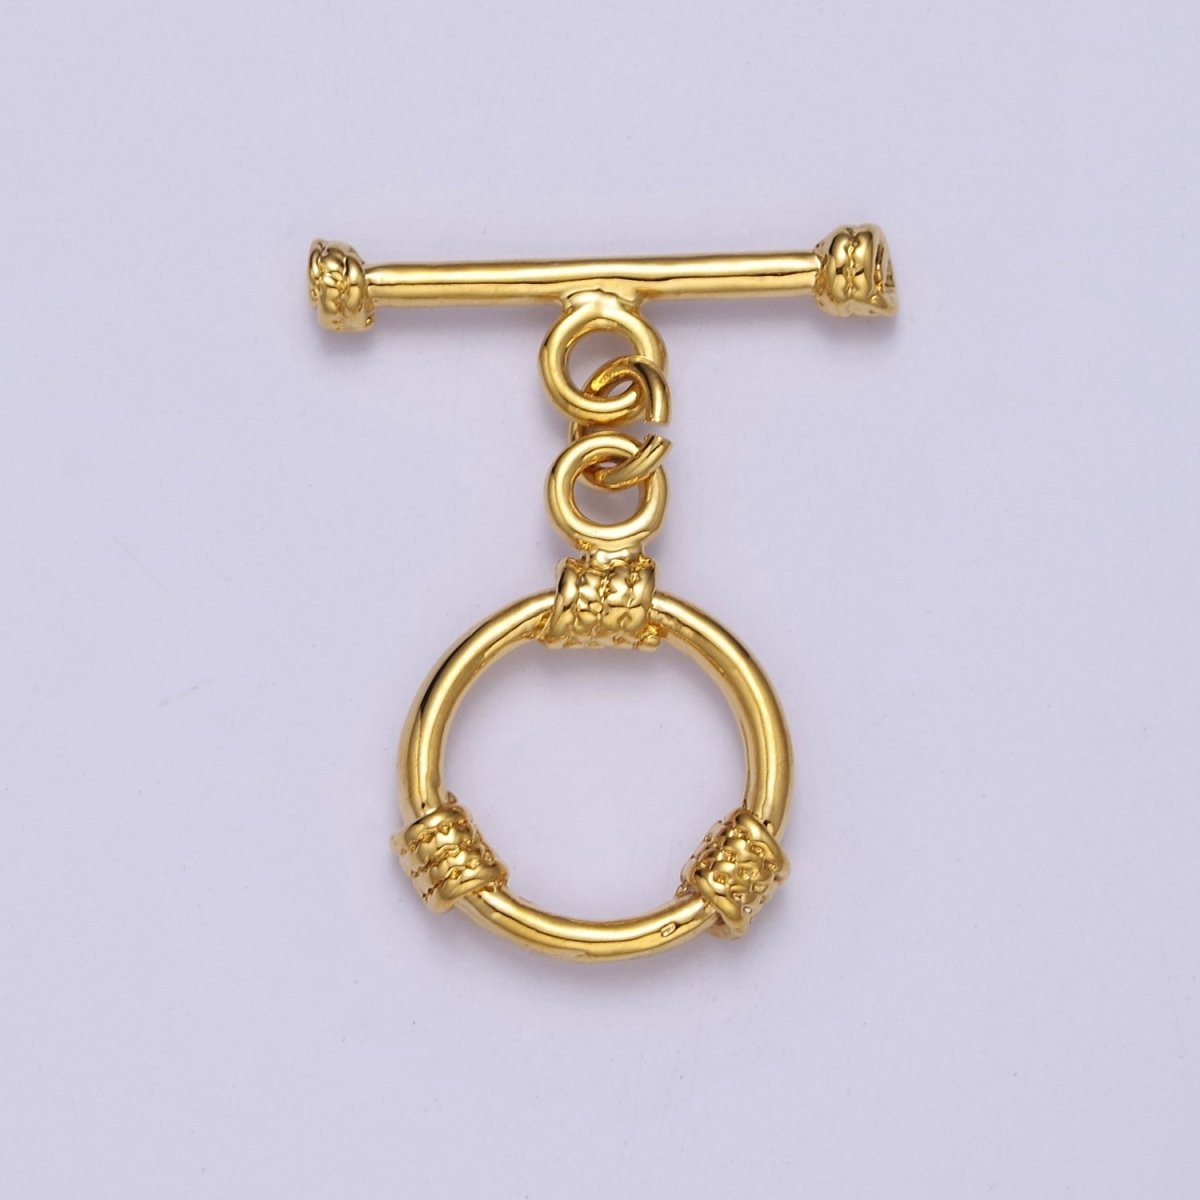 24k Gold Filled Round Toggle Clasp, Jewelry Clasp OT Clasp Findings L-693 L-694 L-695 - DLUXCA